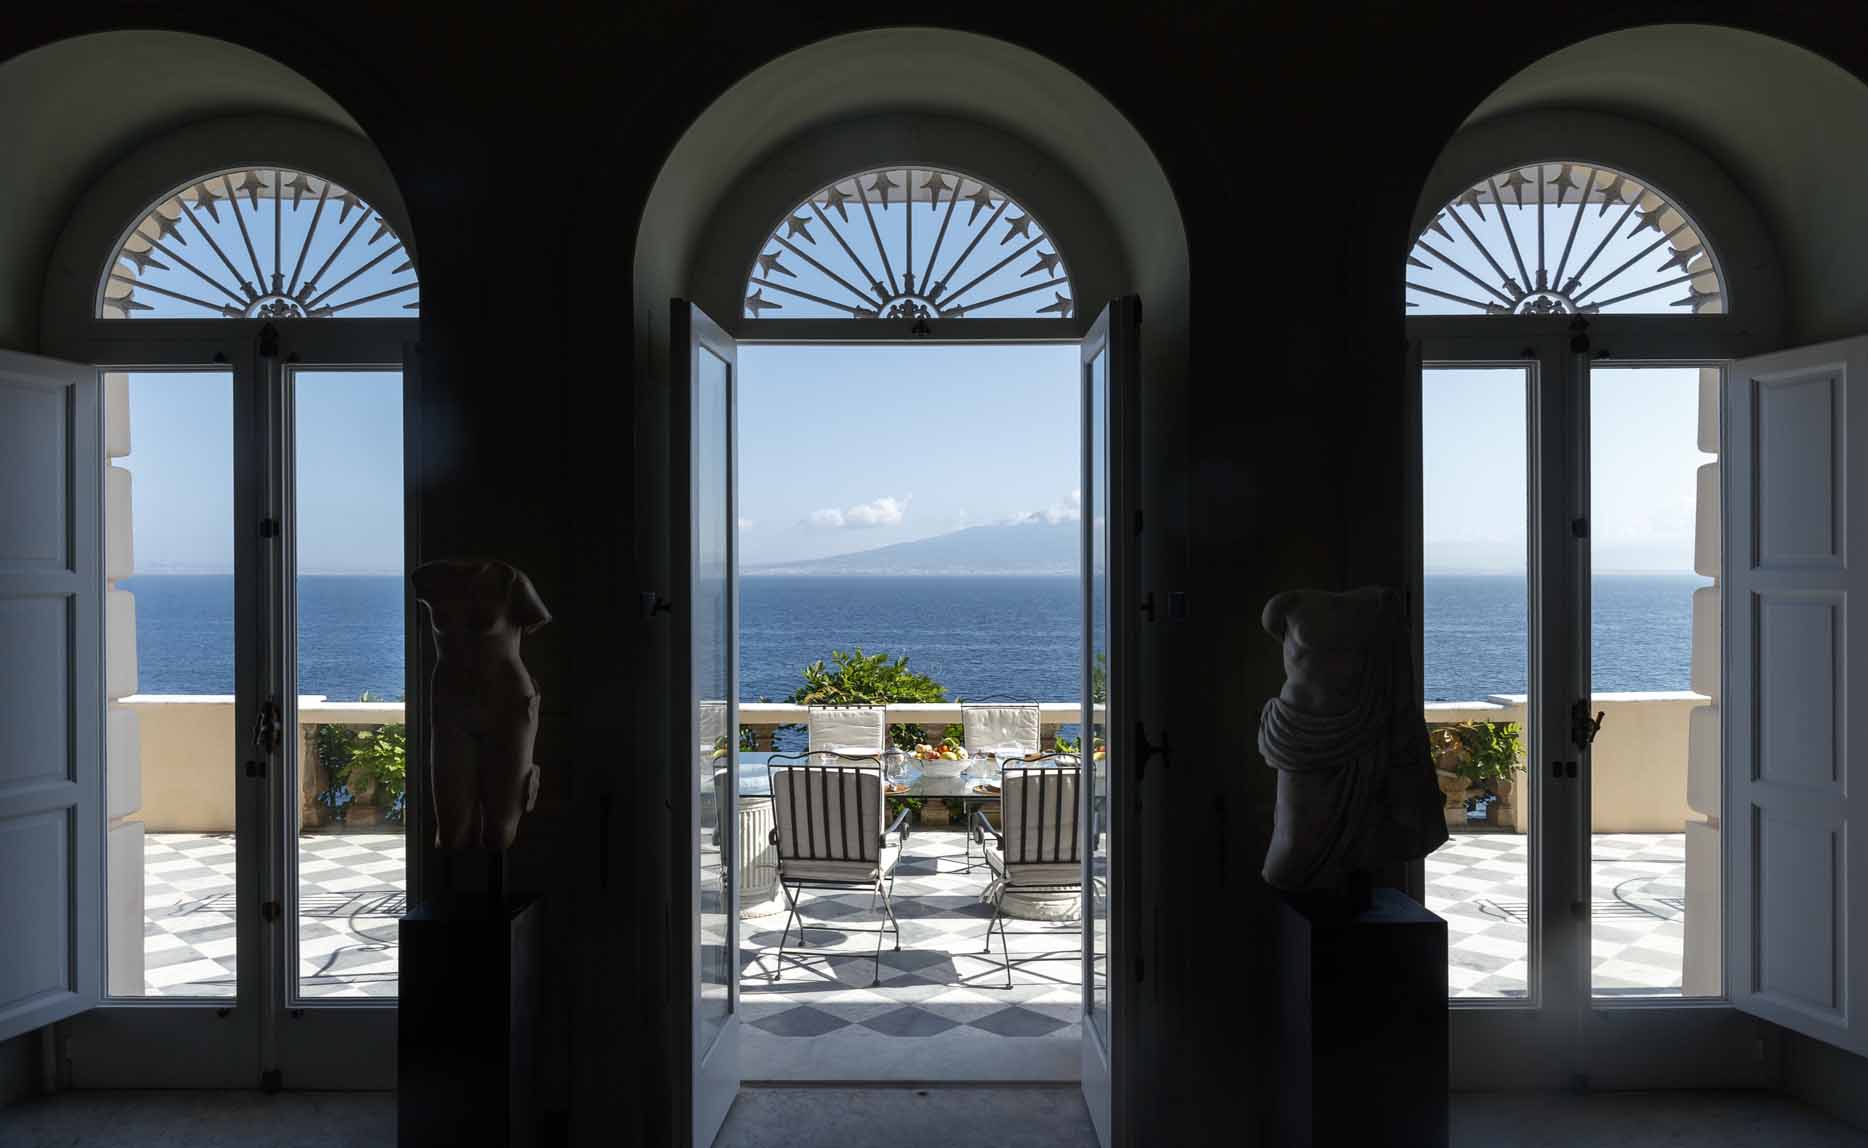 Paradise restored on the Amalfi Coast